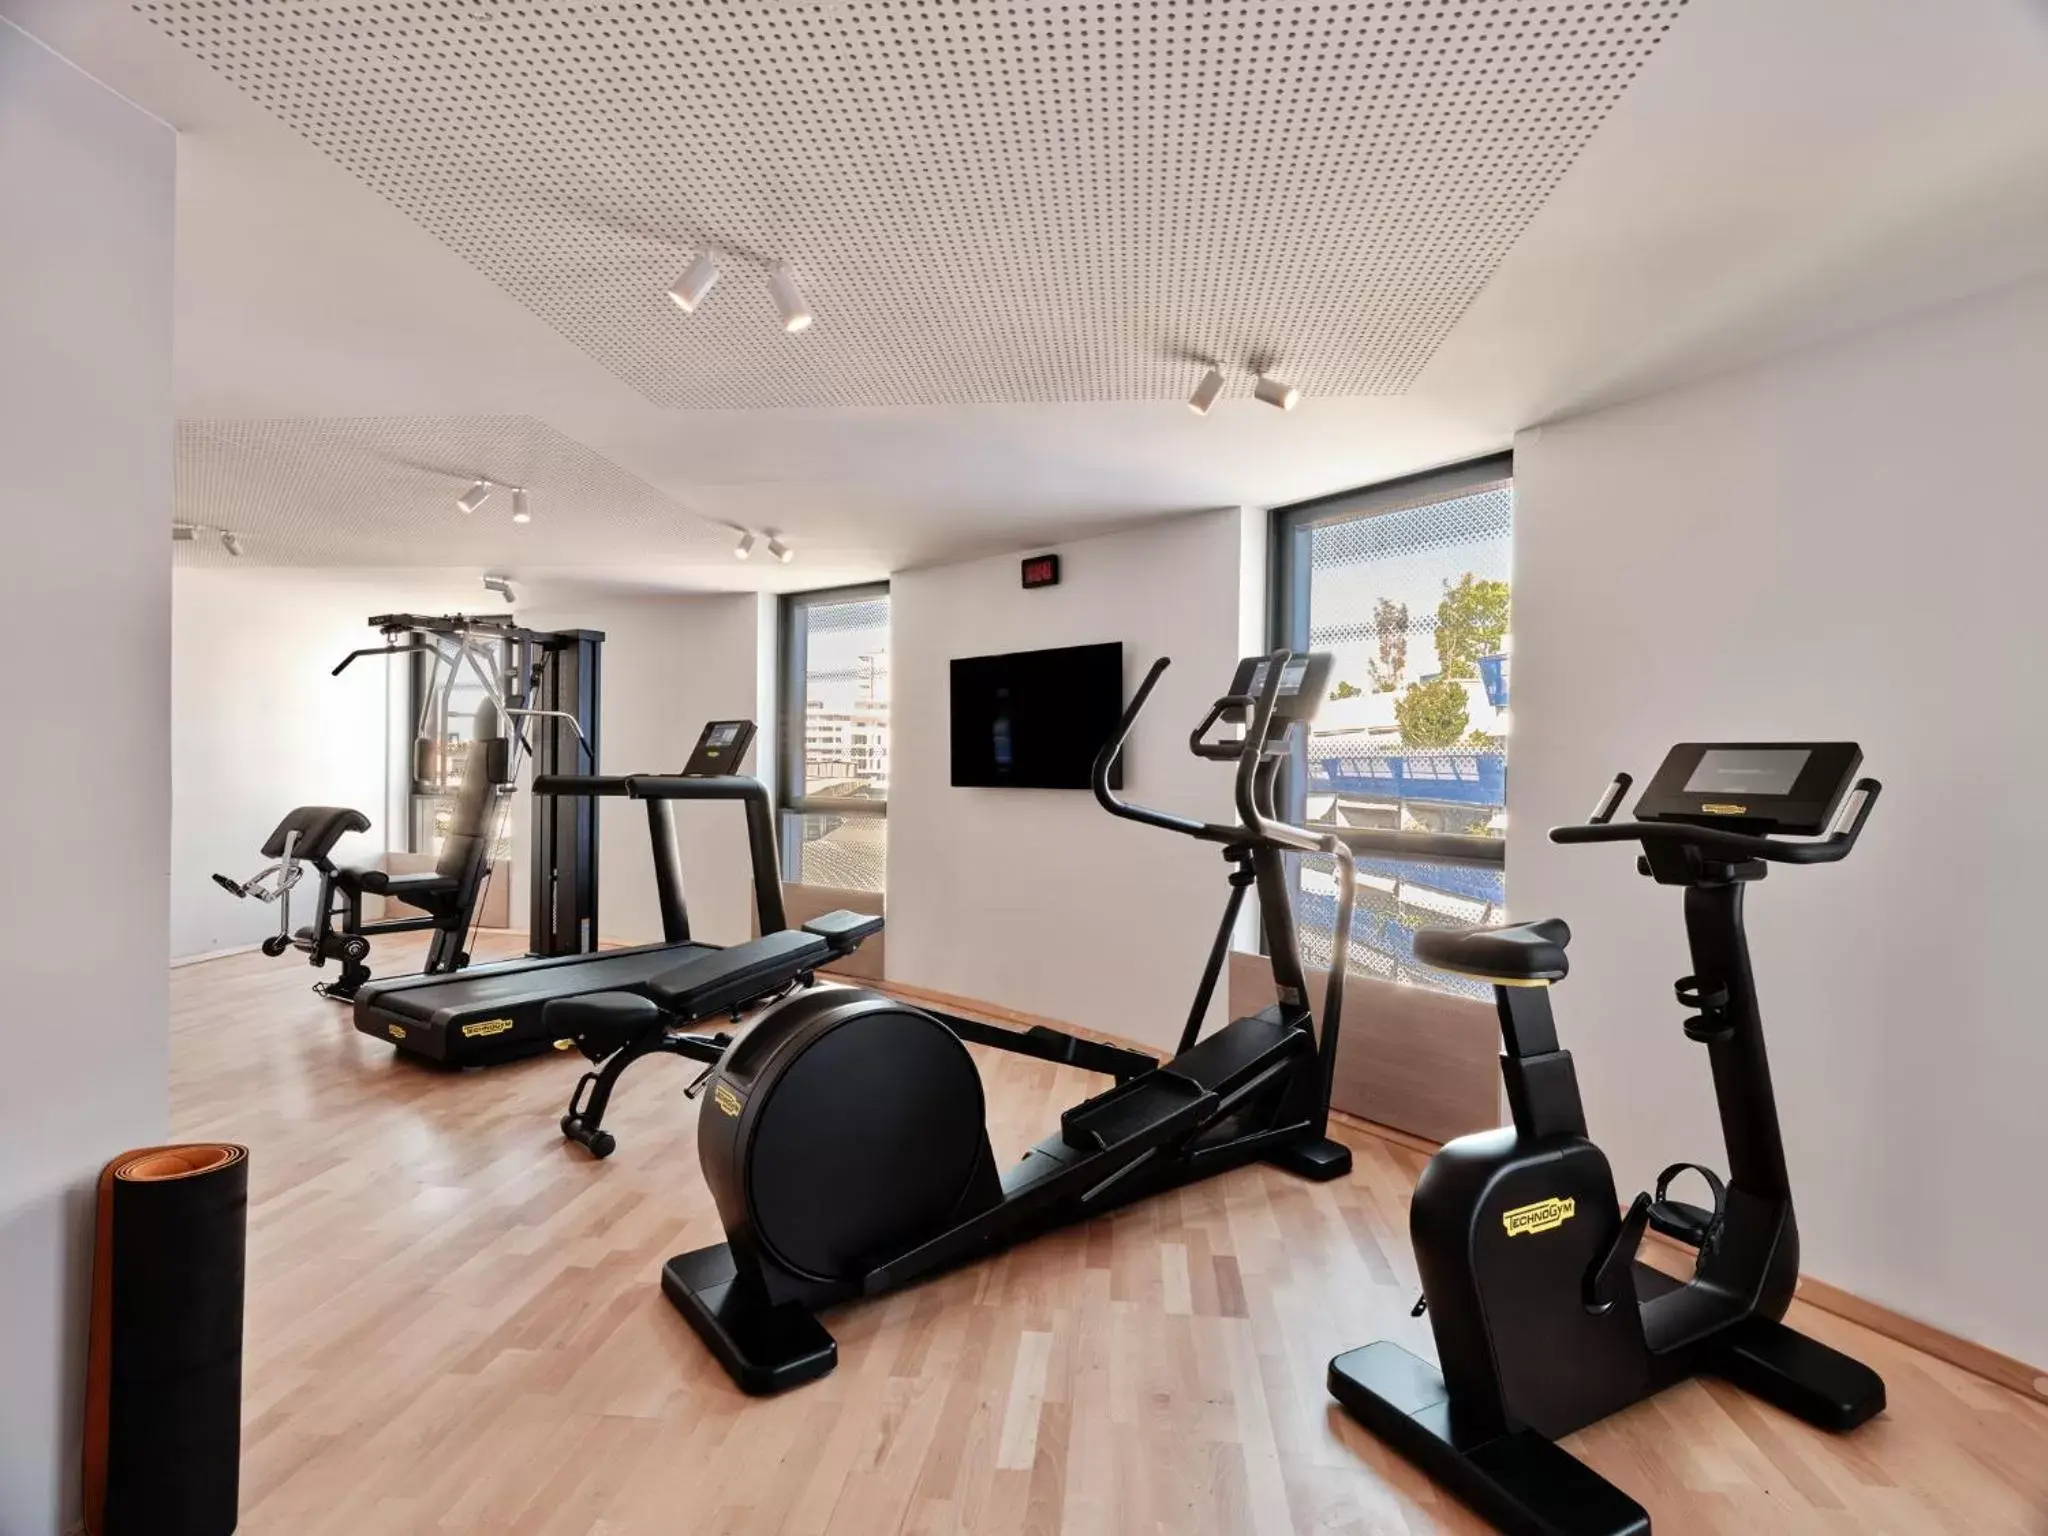 Fitness centre/facilities, Fitness Center/Facilities in Crowne Plaza - Marseille Le Dôme